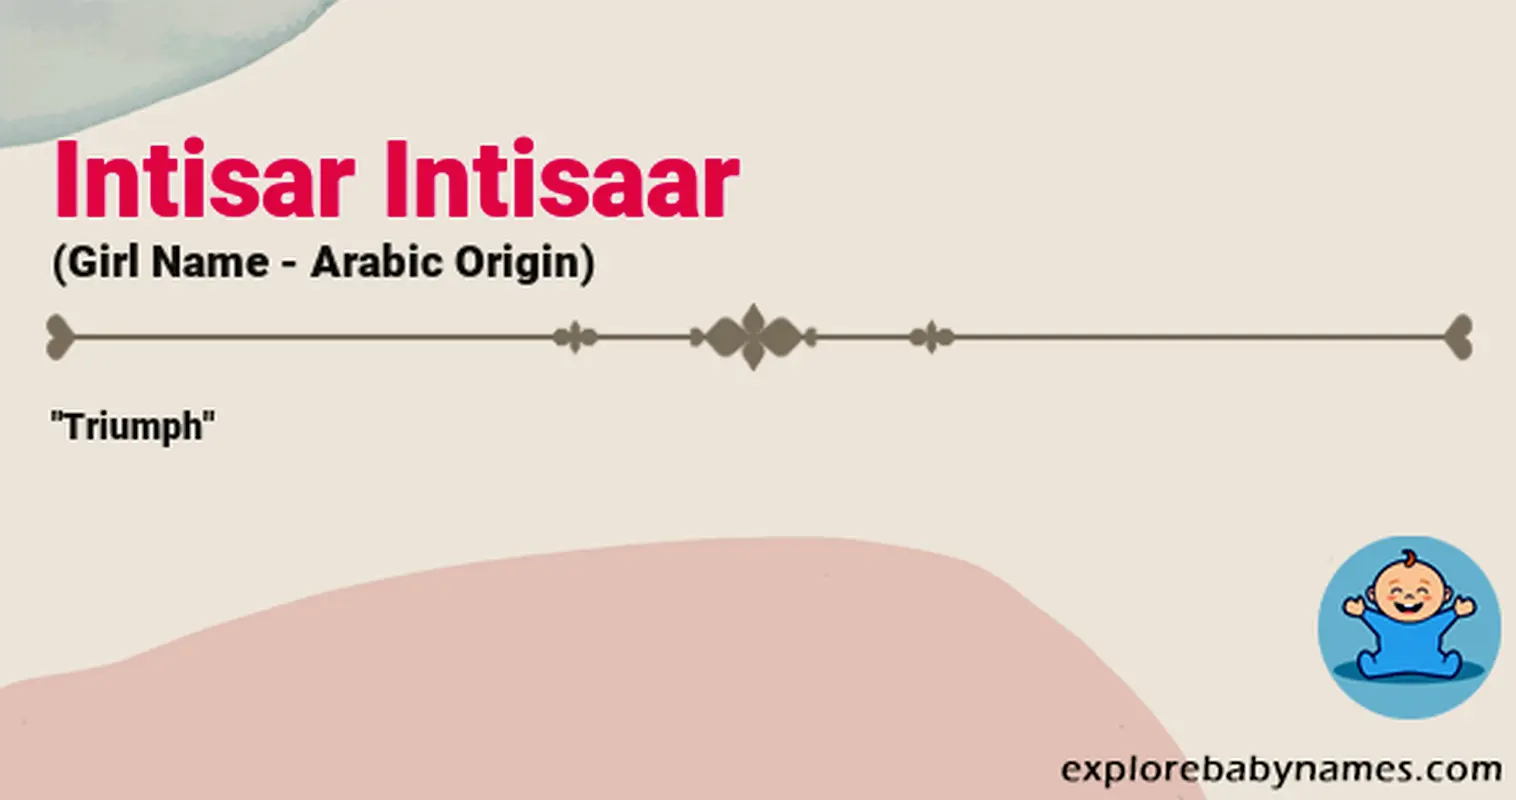 Meaning of Intisar Intisaar